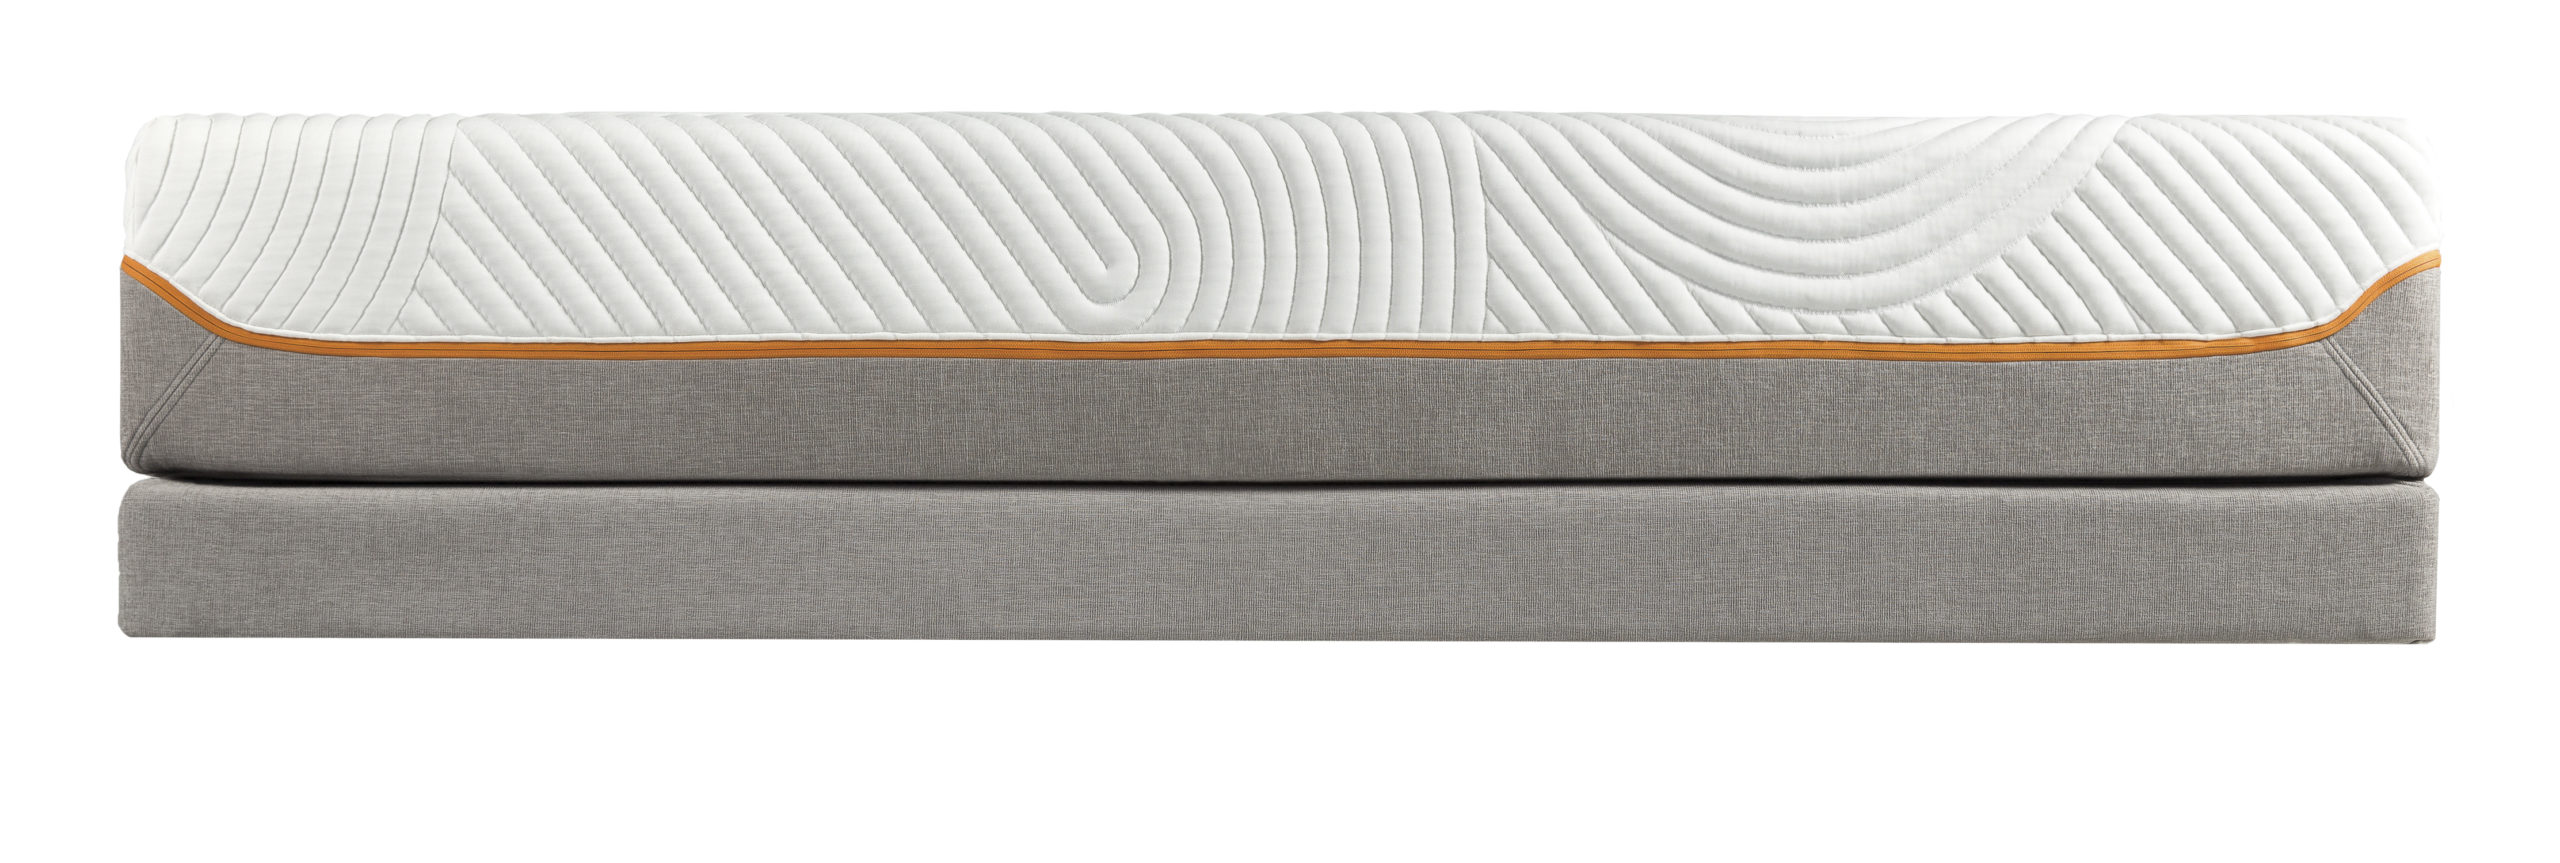 tempur pedic contour elite breeze mattress review